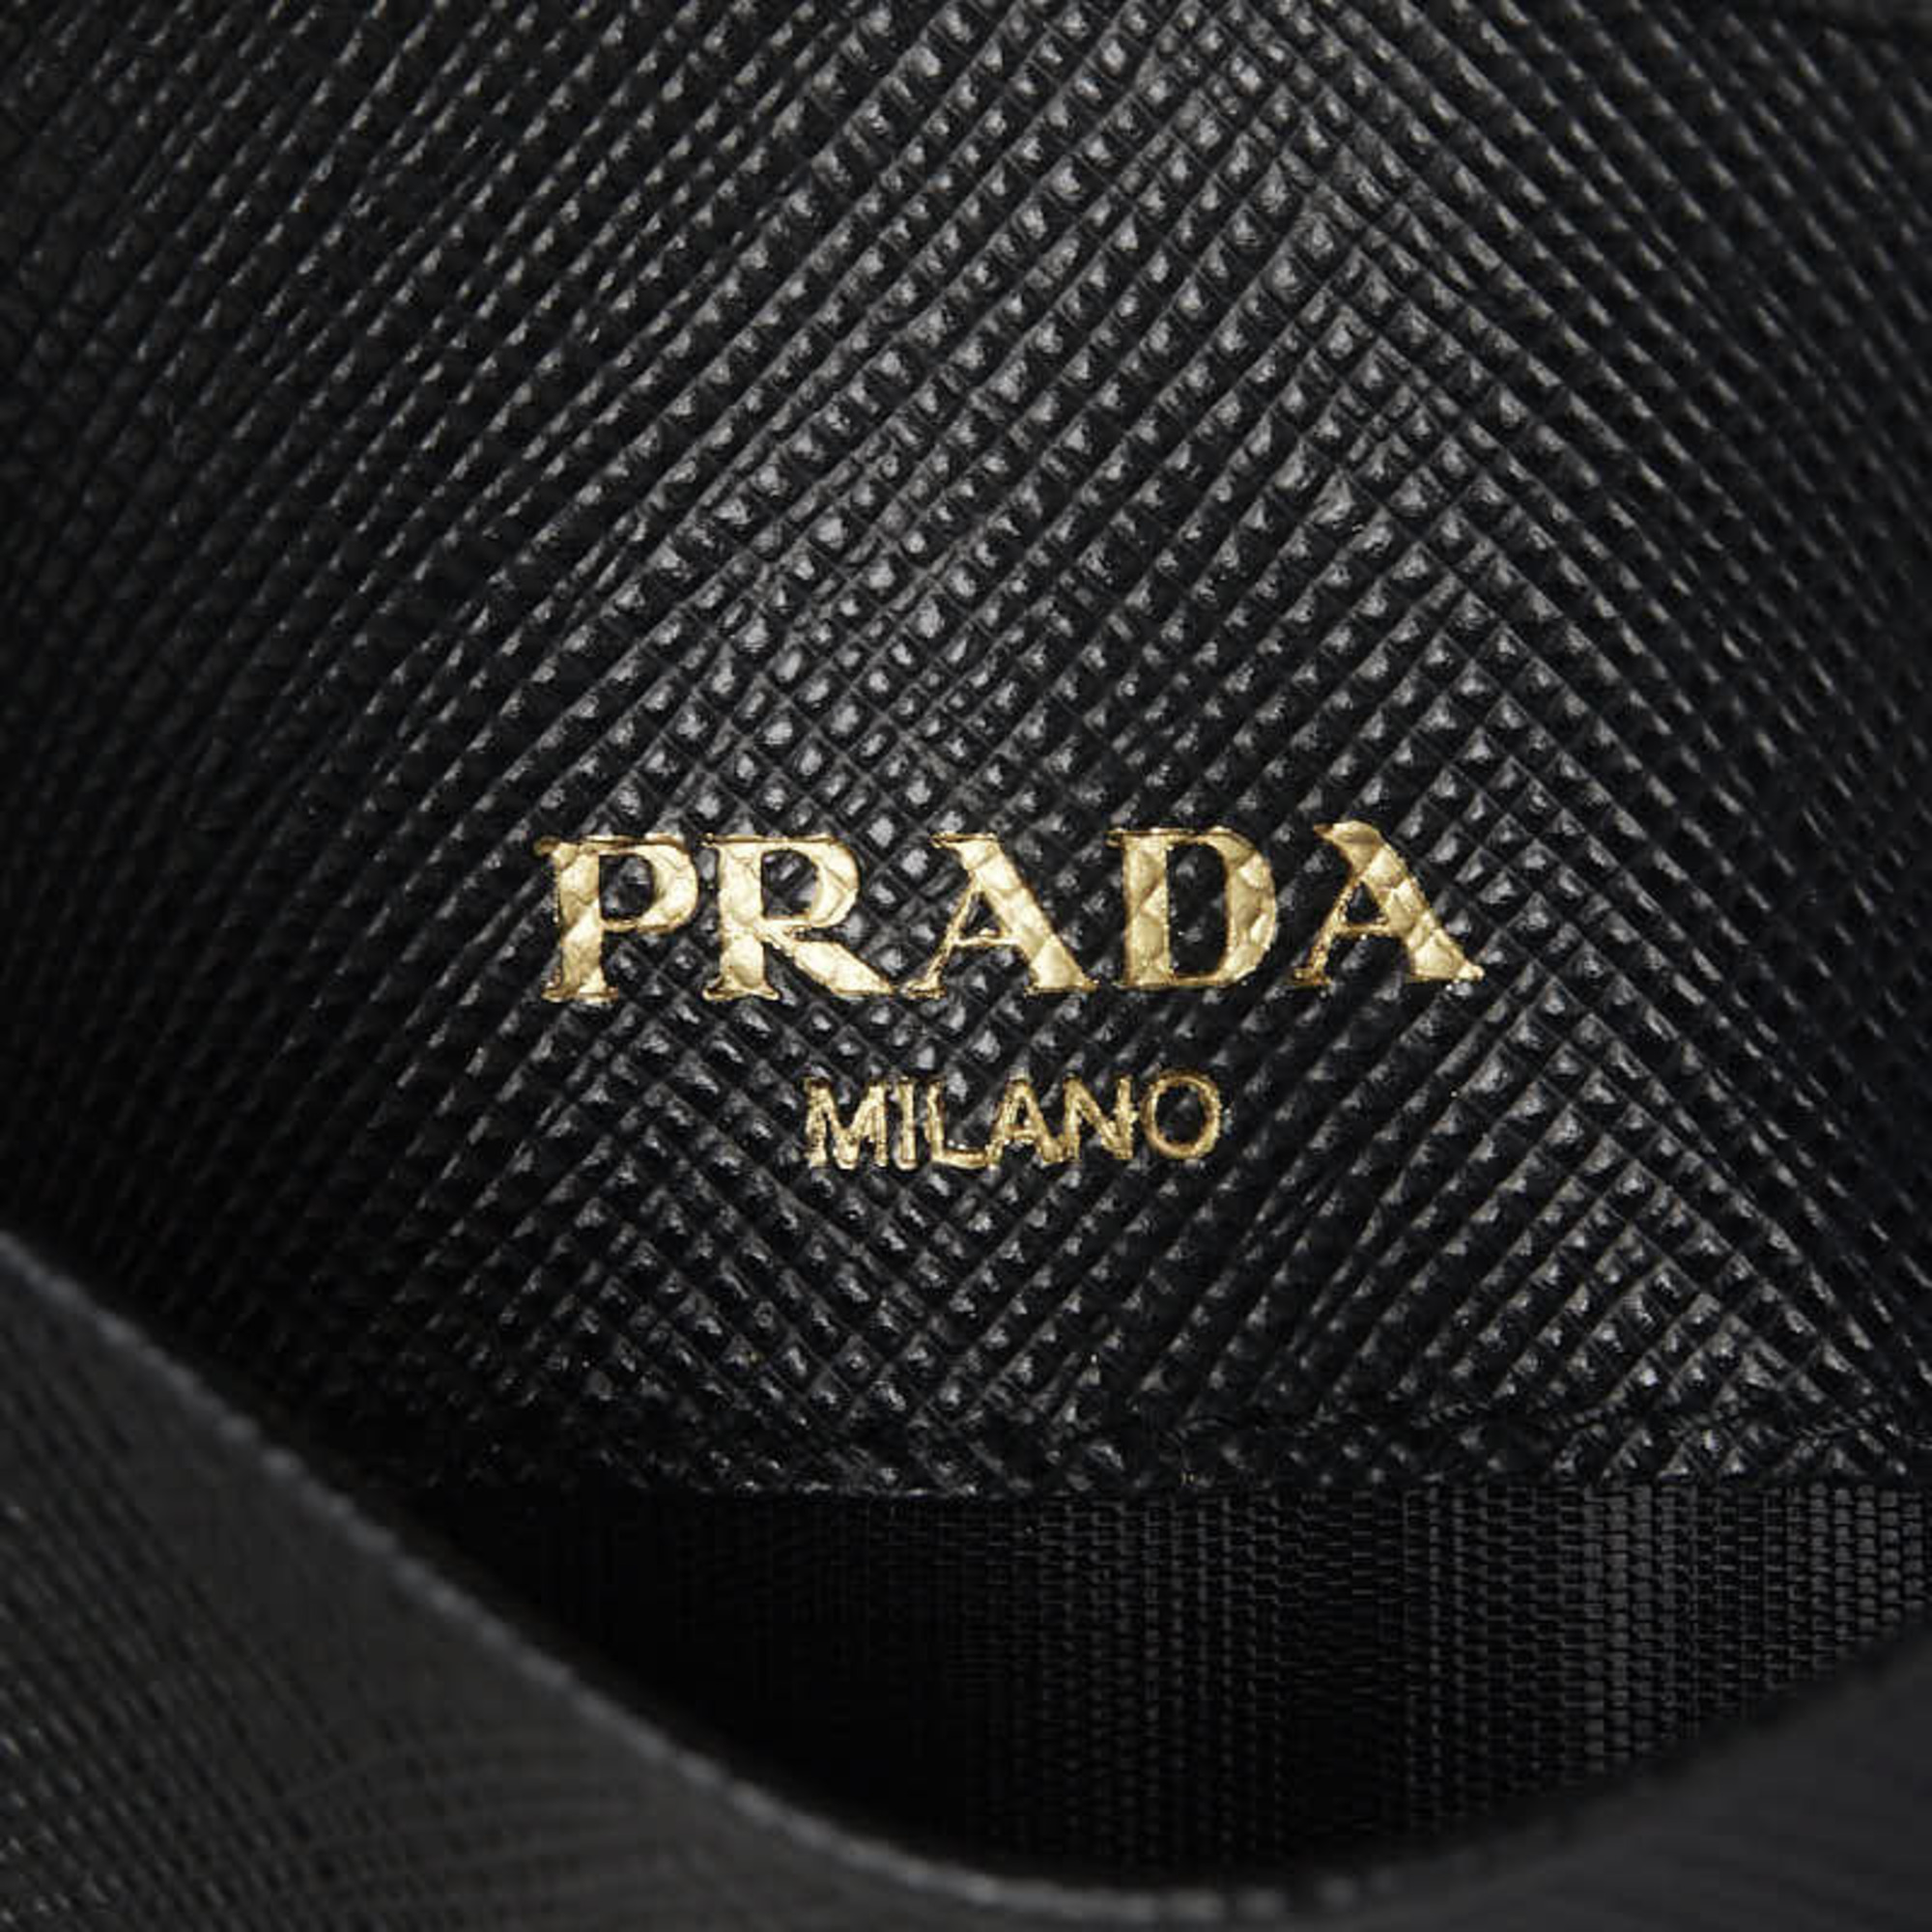 Prada Saffiano 6-series key case 1PG222 black leather ladies PRADA